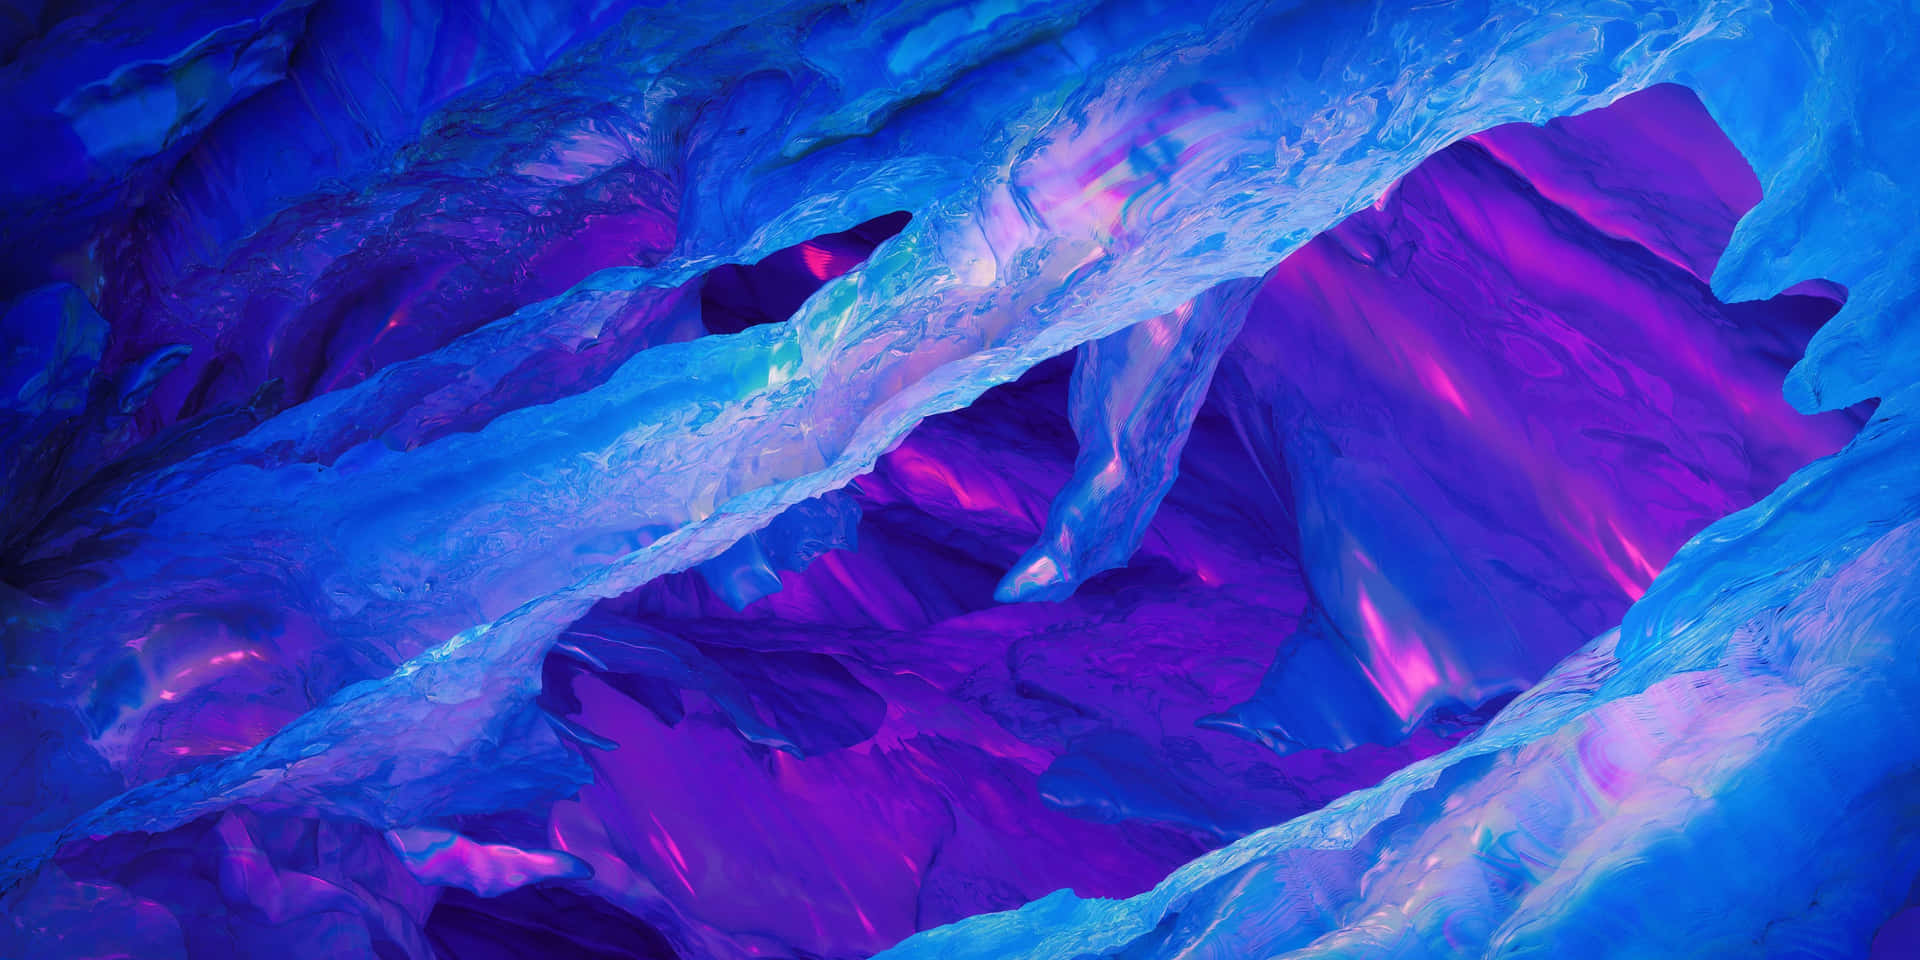 A calming Blue and Purple Desktop Wallpaper